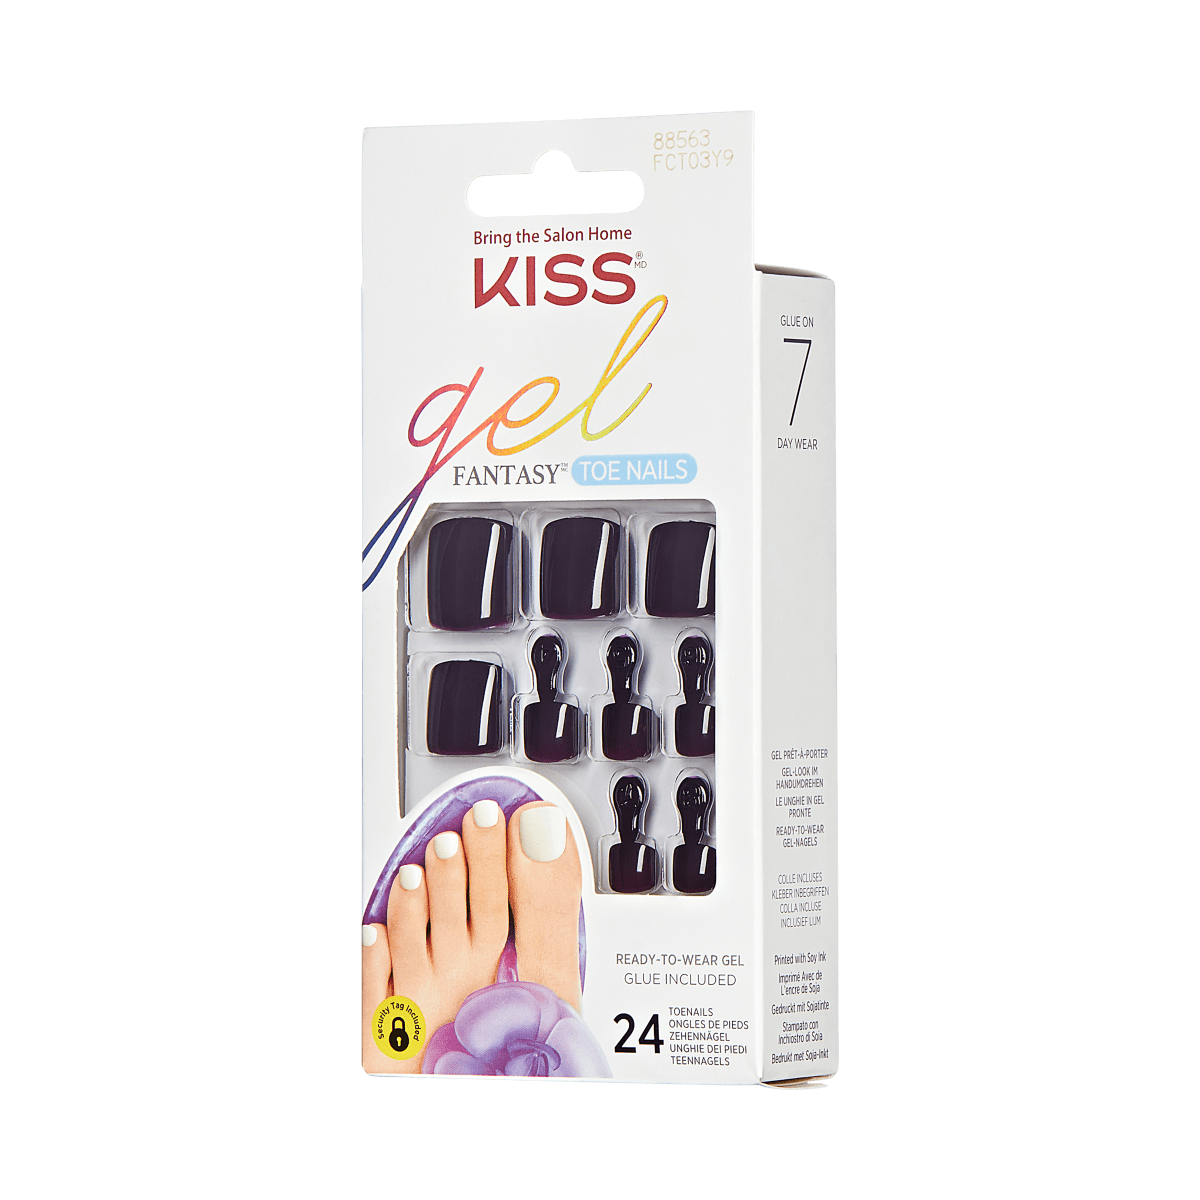 KISS Gel Fantasy Toenails- Dark Chocolate